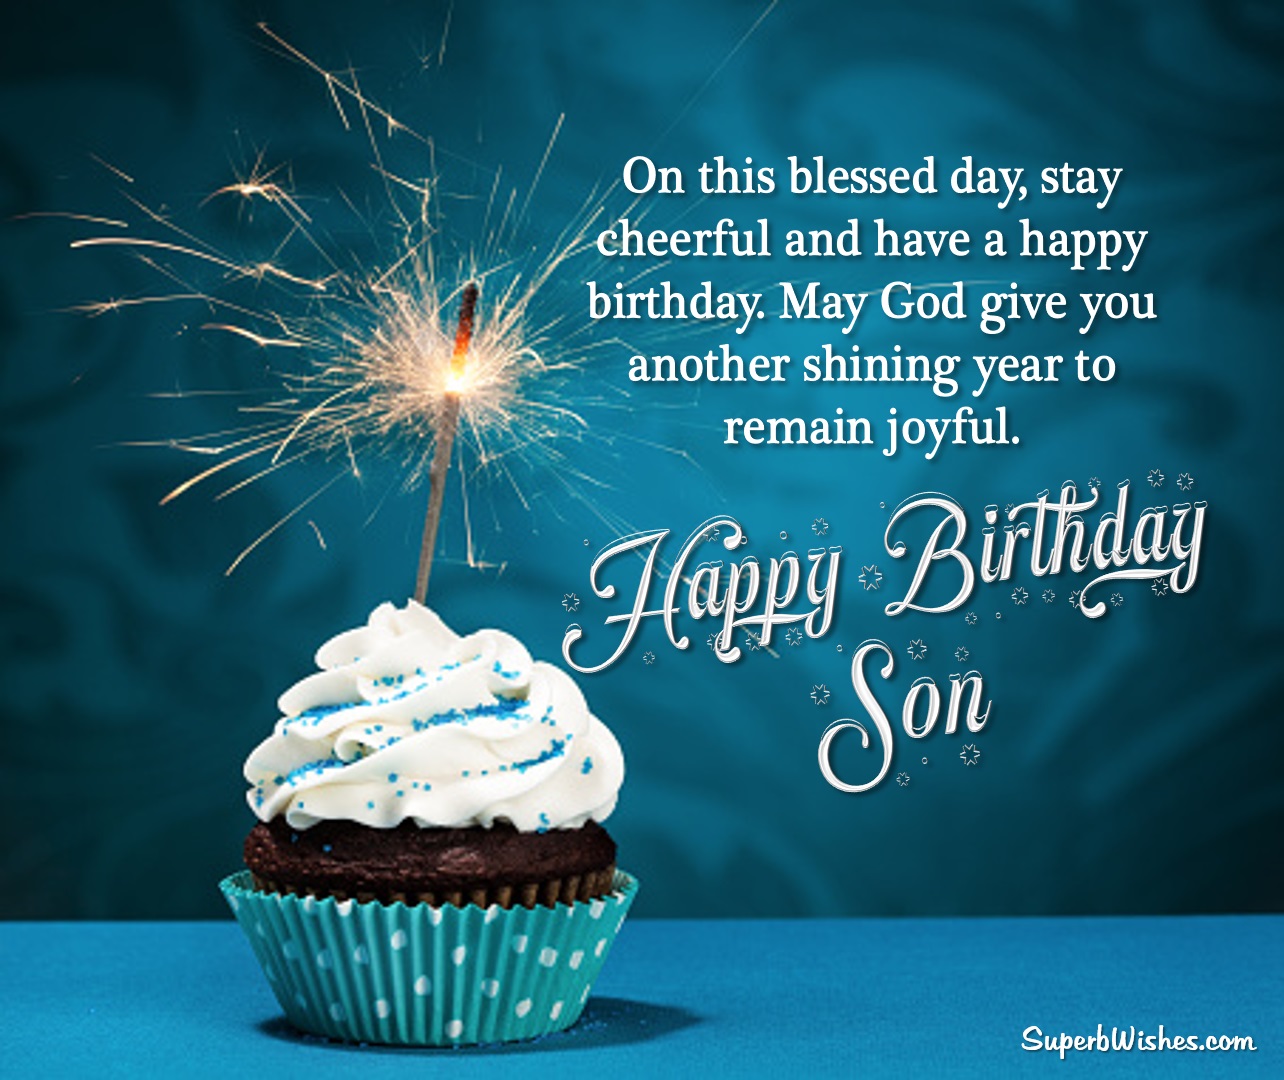 Happy birthday wishes son. Superbwishes.com